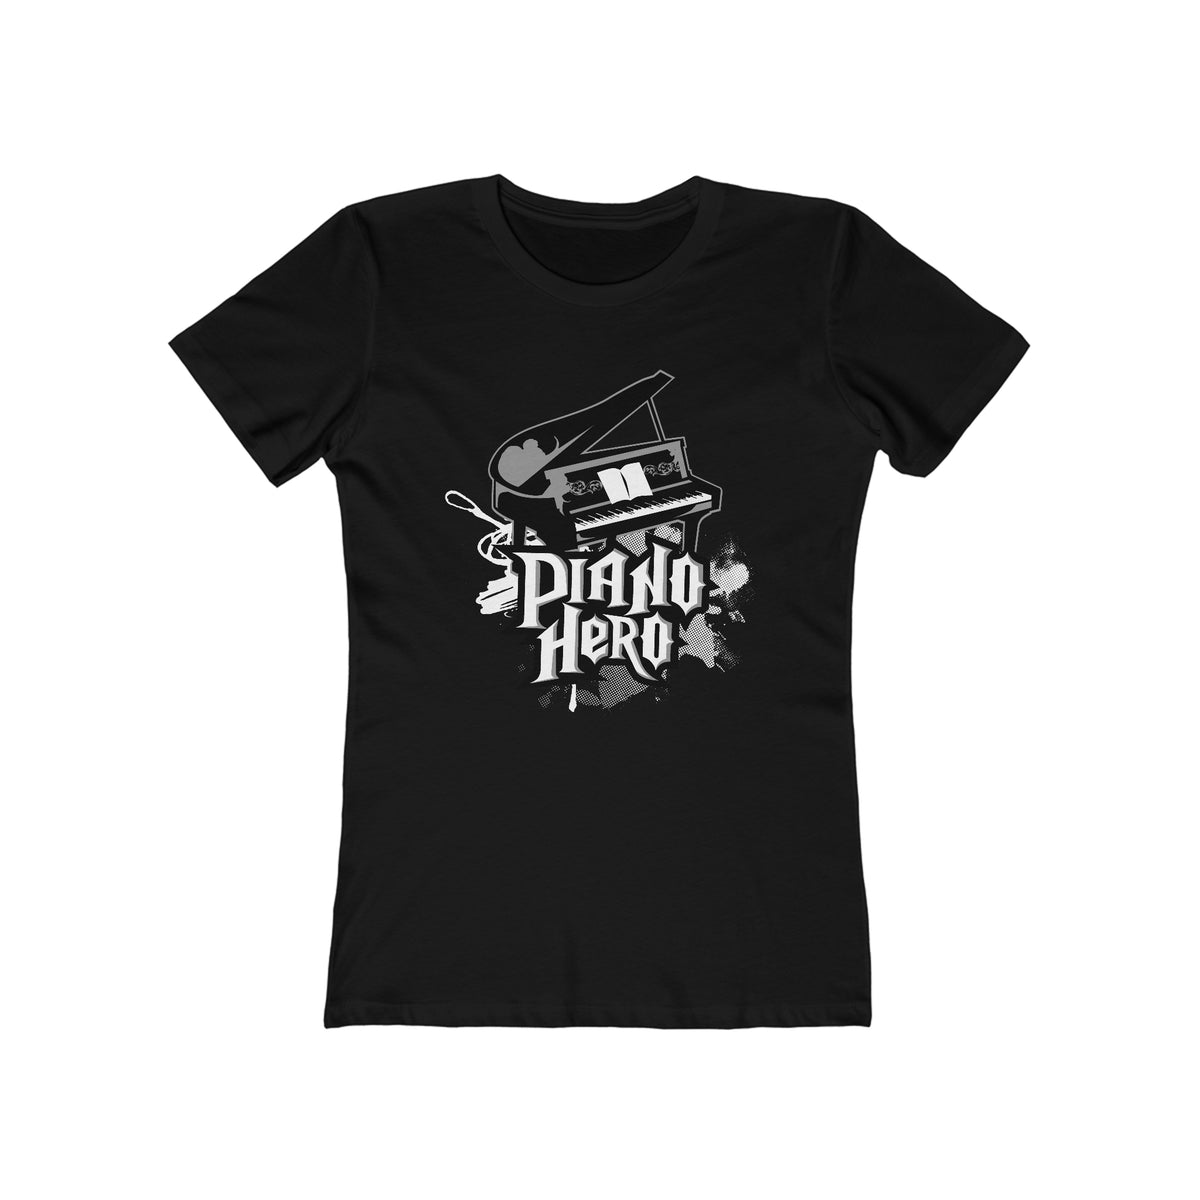 Piano Hero - Women’s T-Shirt